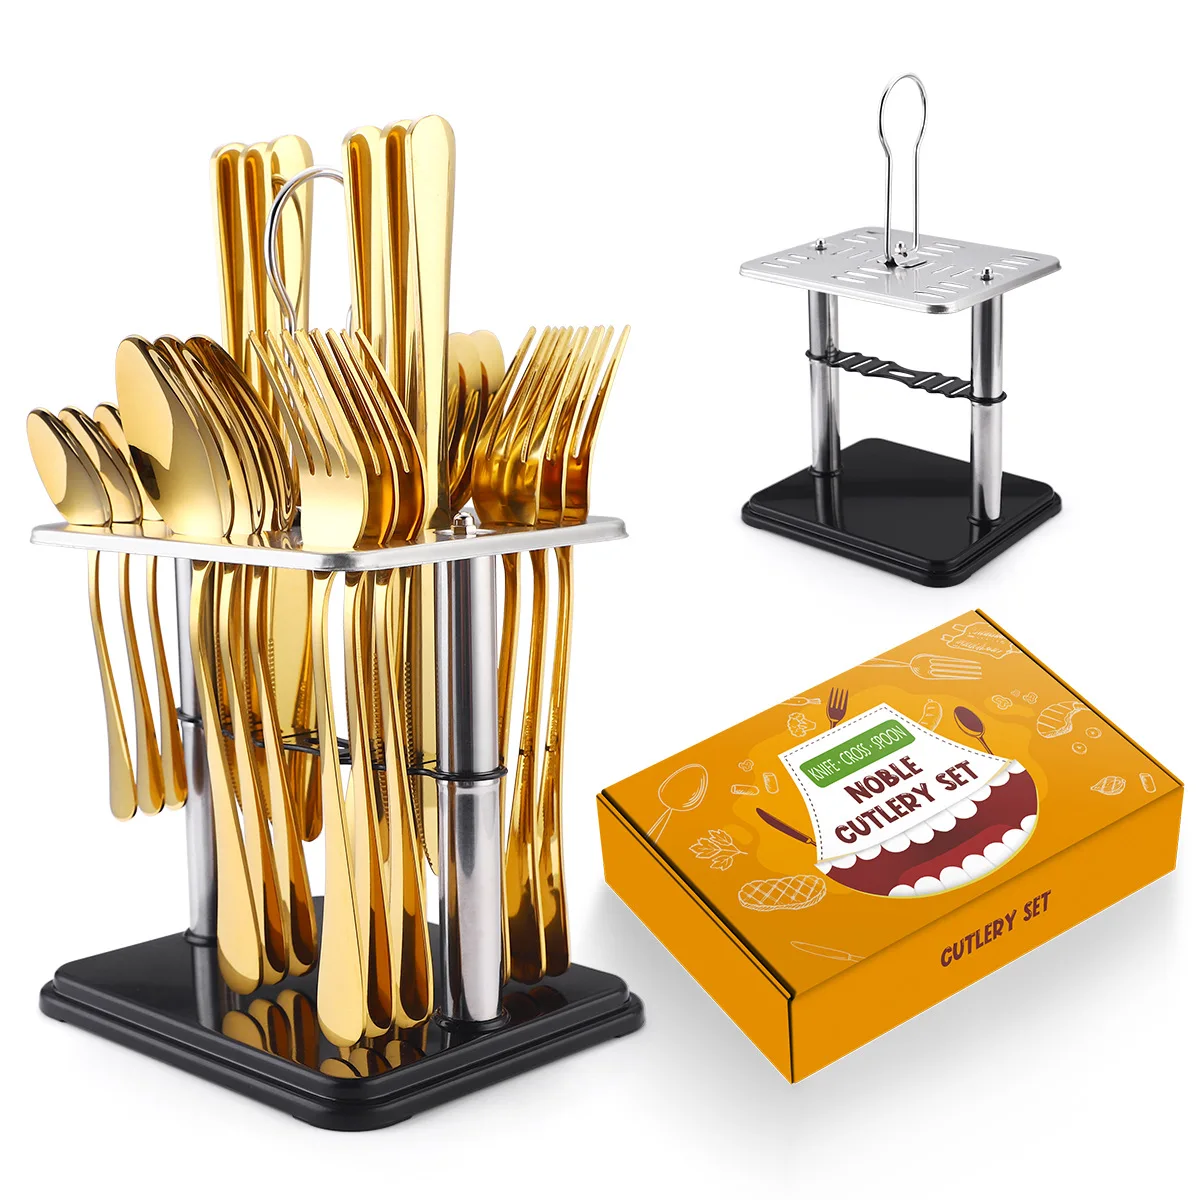 

Gold Cutlery Tableware 24 PCS Stainless Steel Knife Fork Spoon Dinnerware Set Luxury Kitchen Device Sets Zero Waste Gift Box